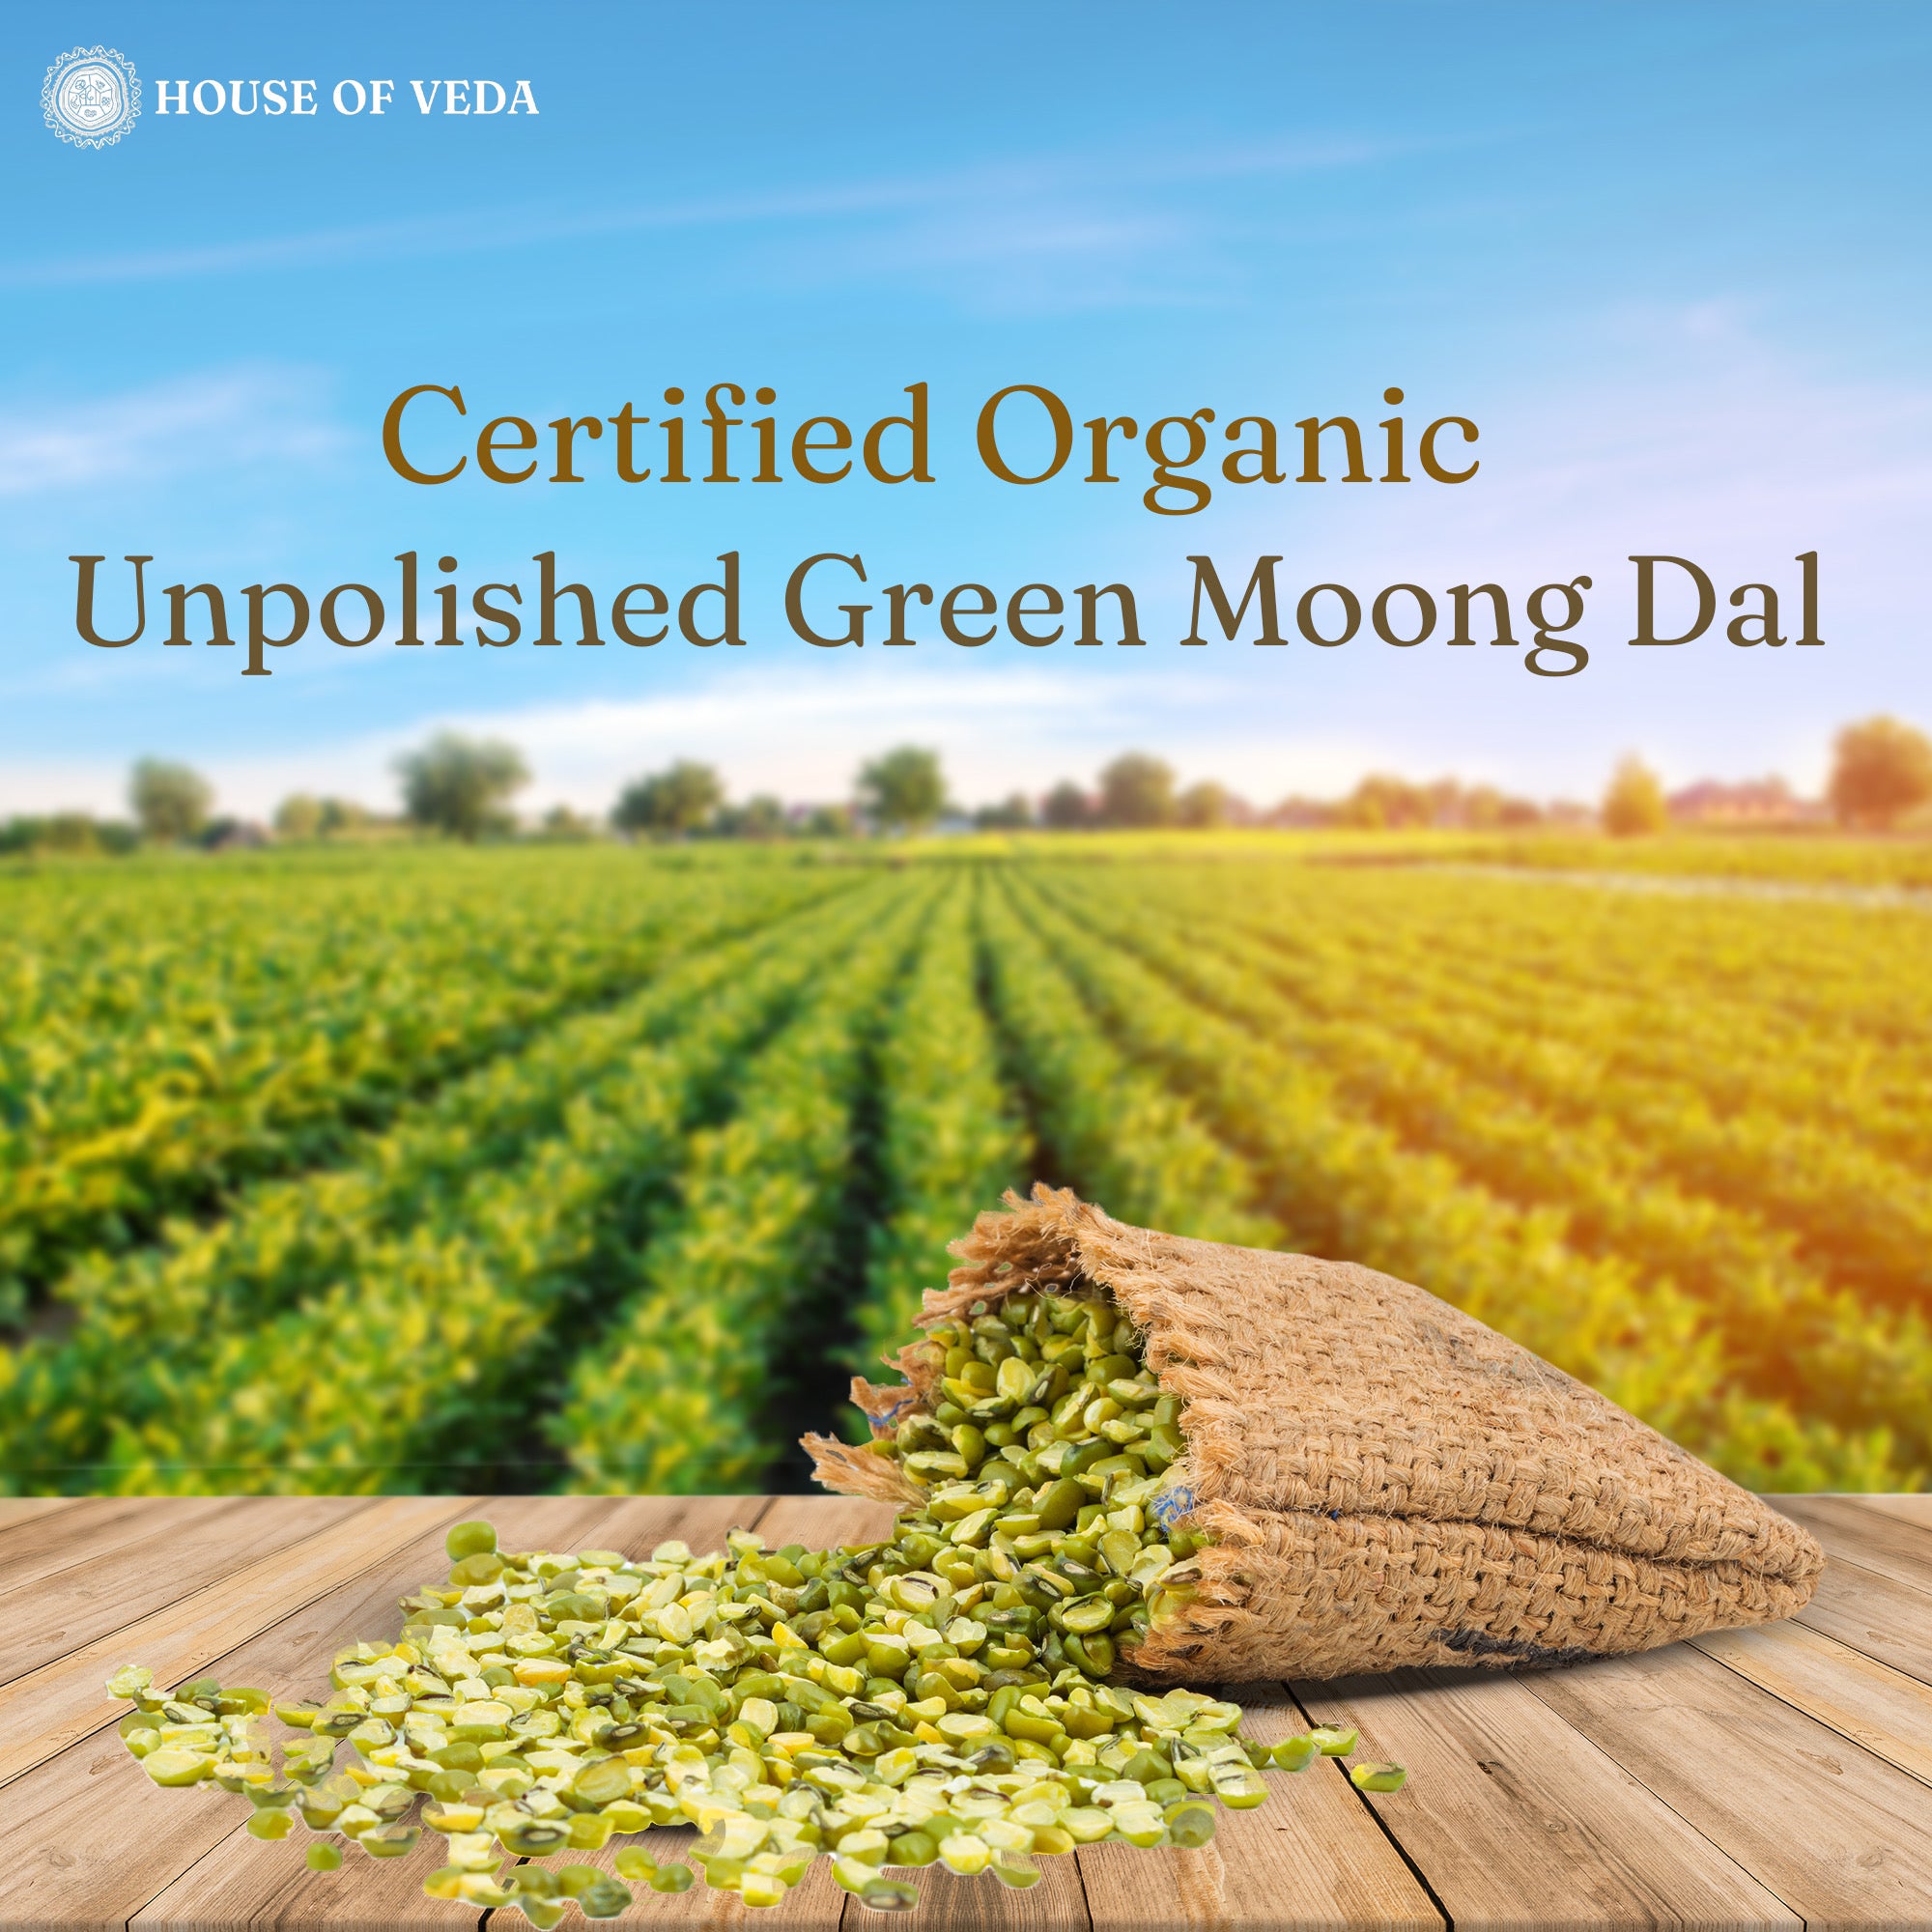 Organic Green Moong Dal 500g